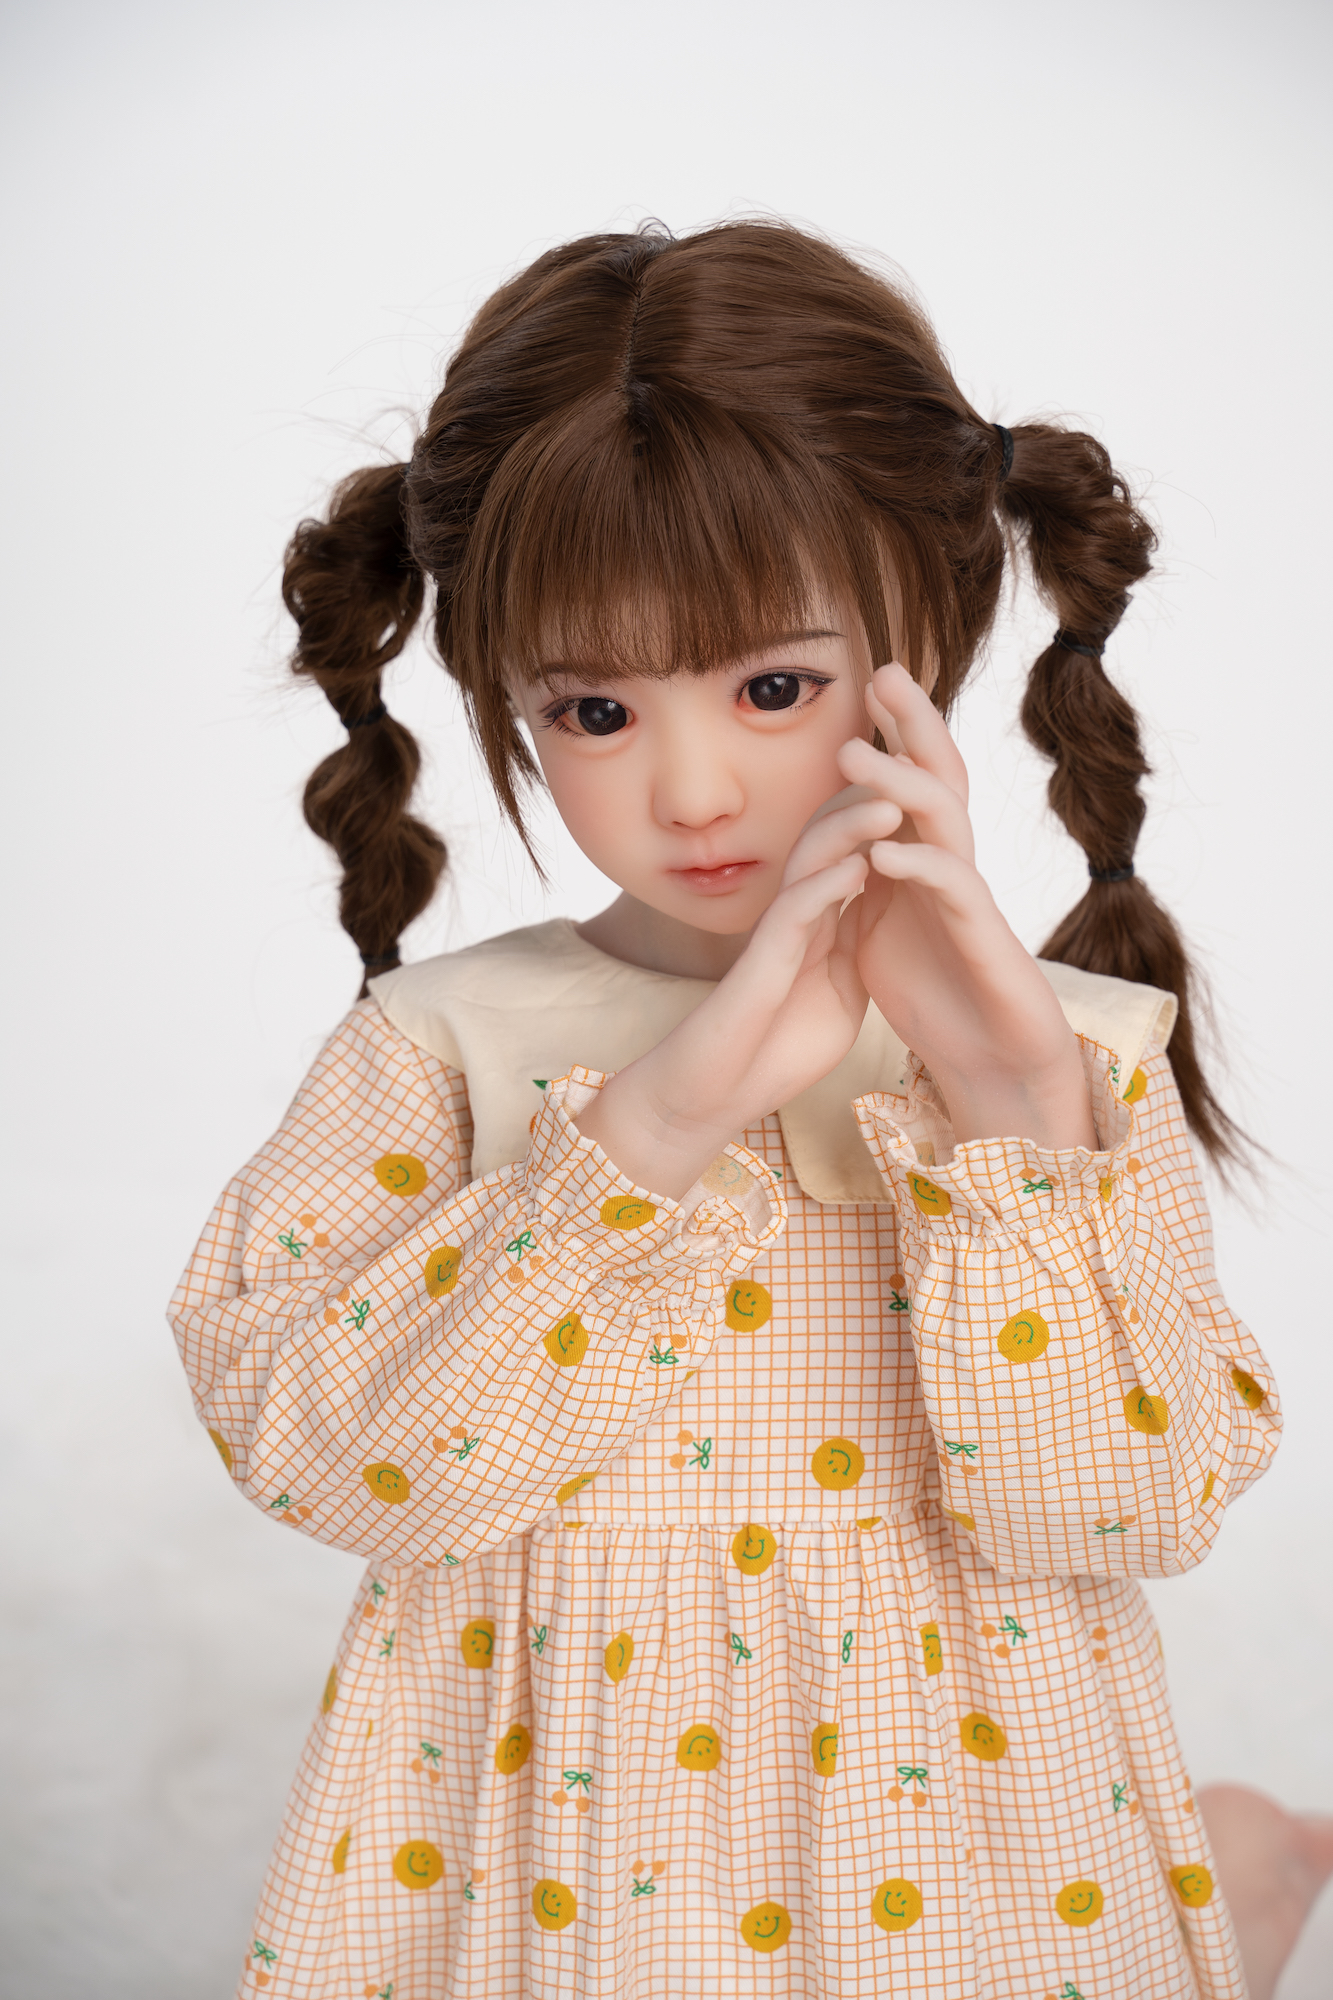 AXBDOLL 108cm Instock TPE Cute Love Doll Head Can Choose - 画像をクリックして閉じます